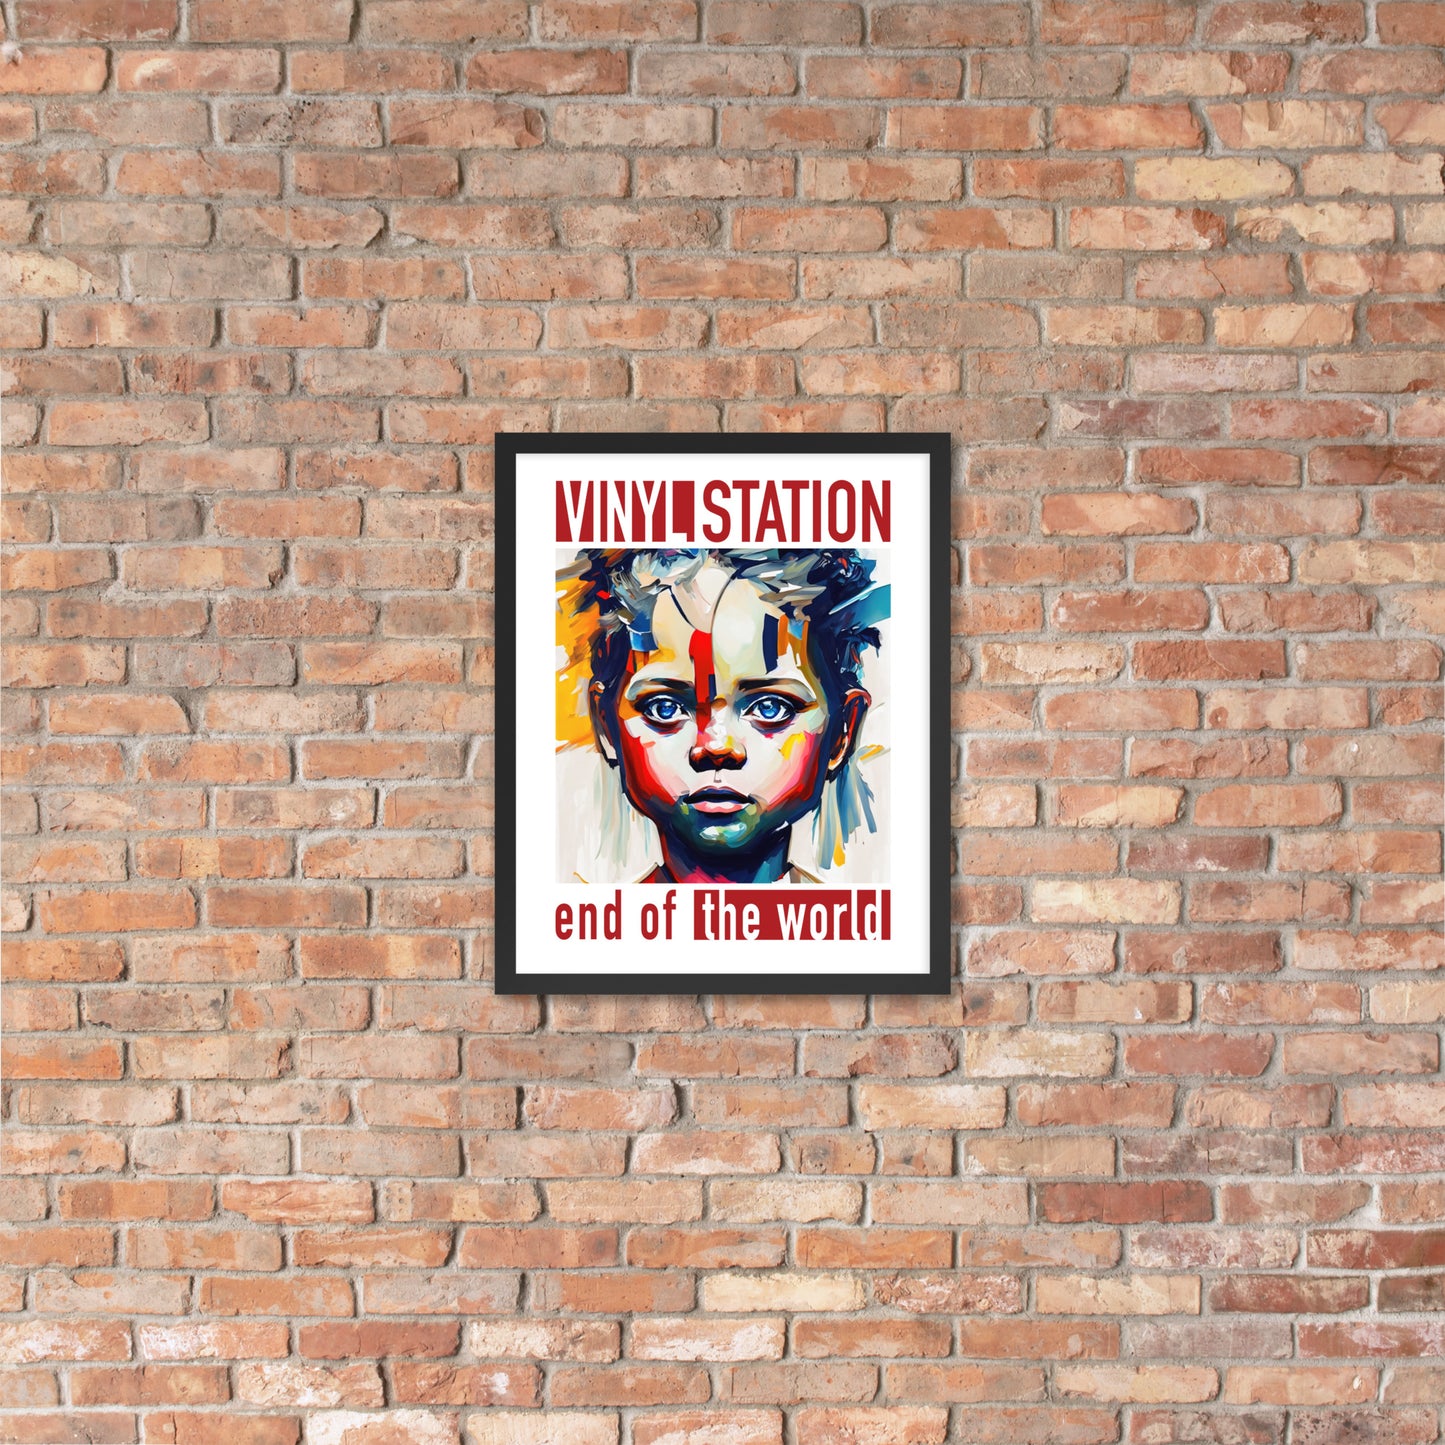 Vinyl Station - Framed poster - End of the World